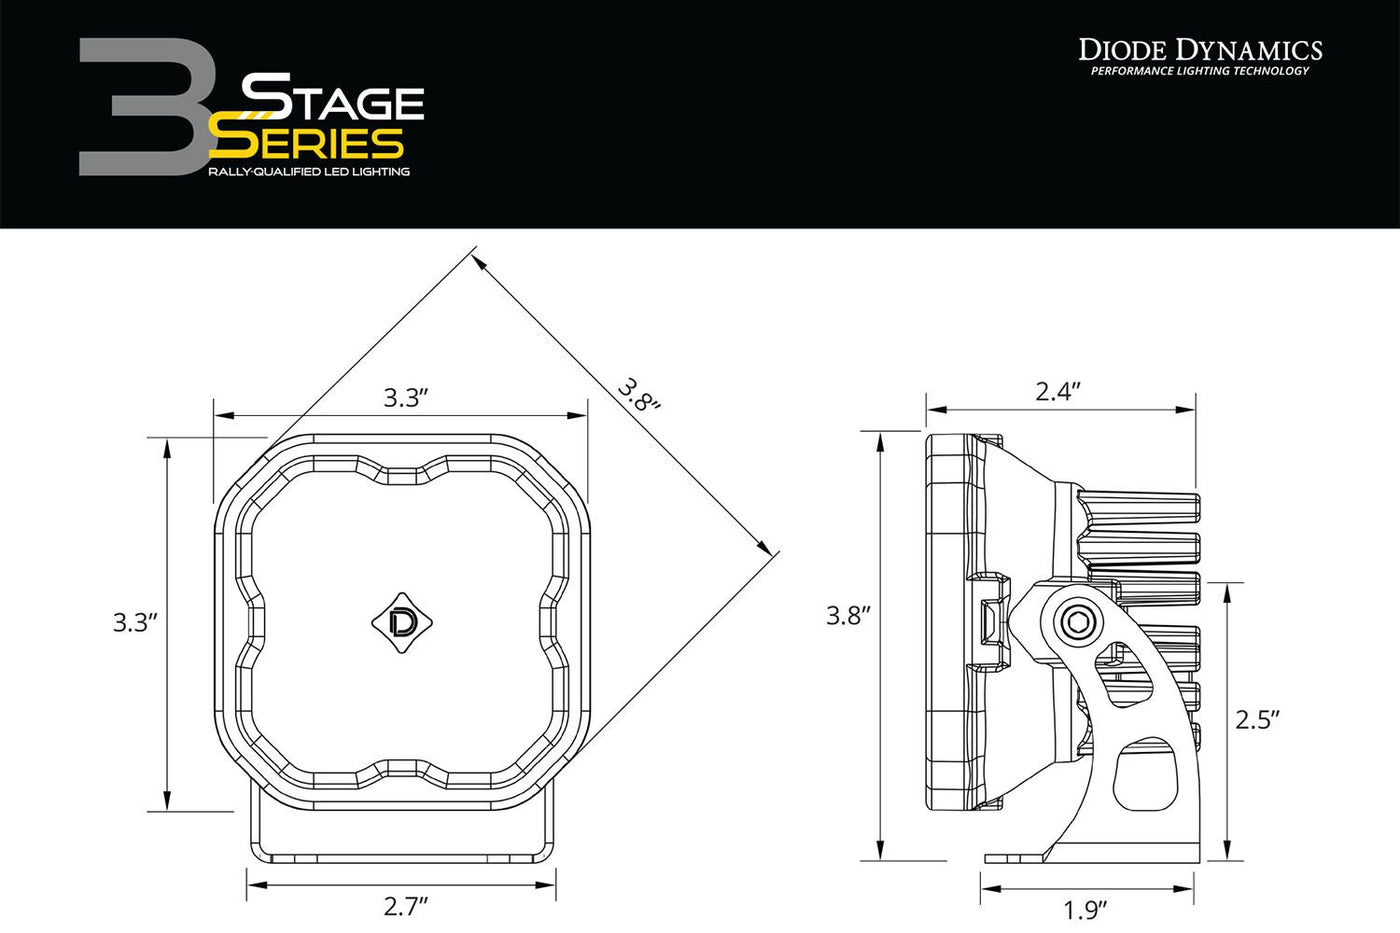 Stage Series 3" SAE White Max LED Pod (pair)